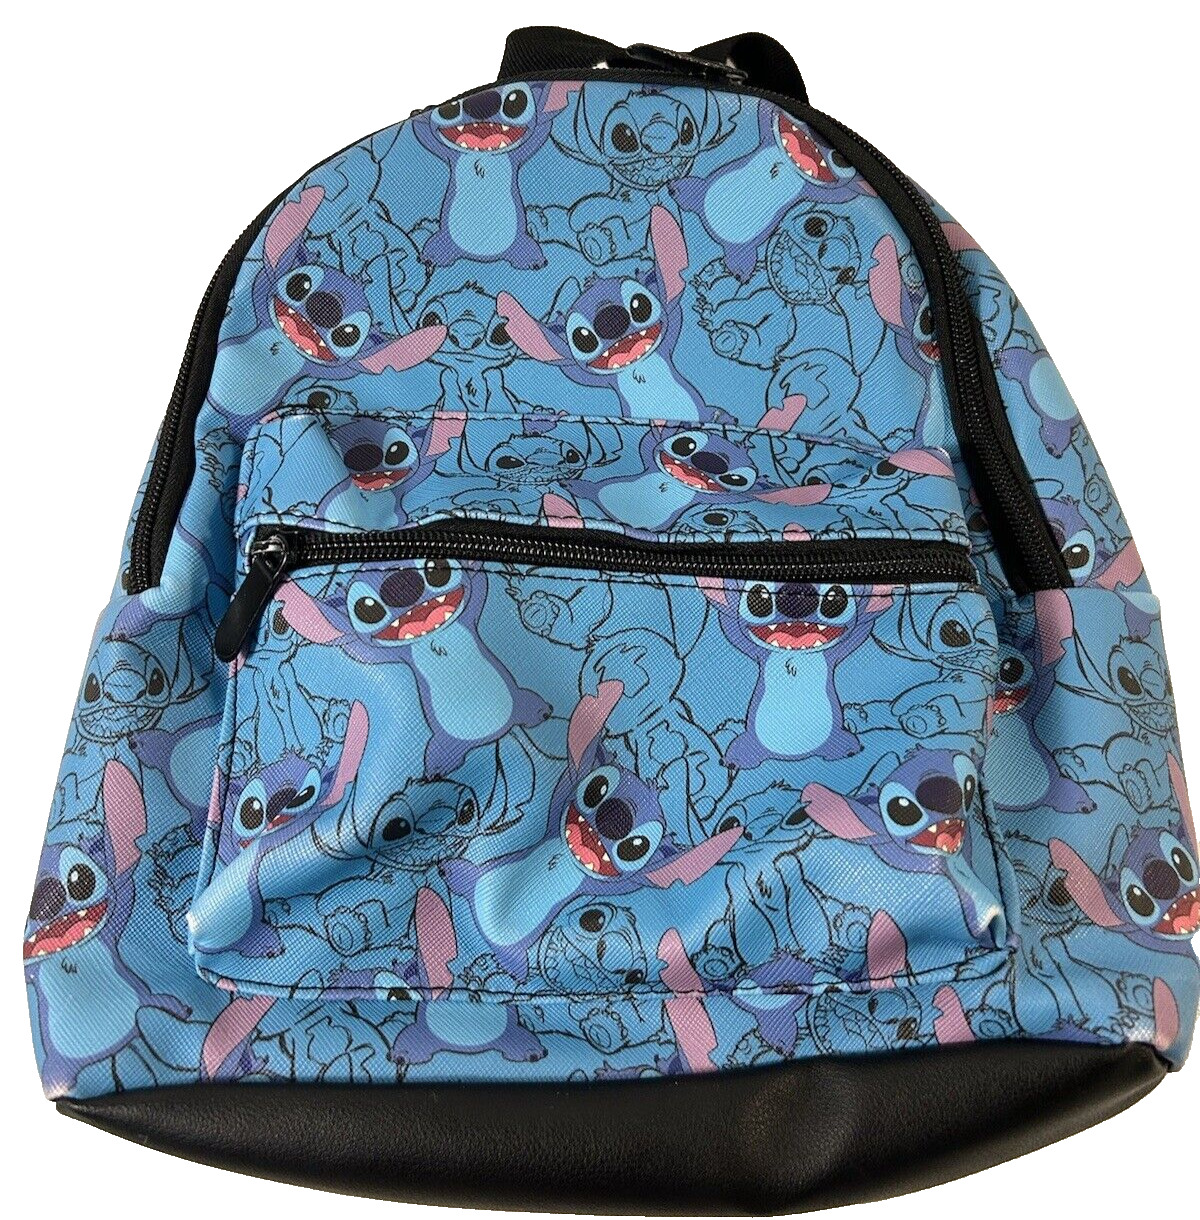 Lilo and Stitch Disney Bioworld Mini Backpack Purse.